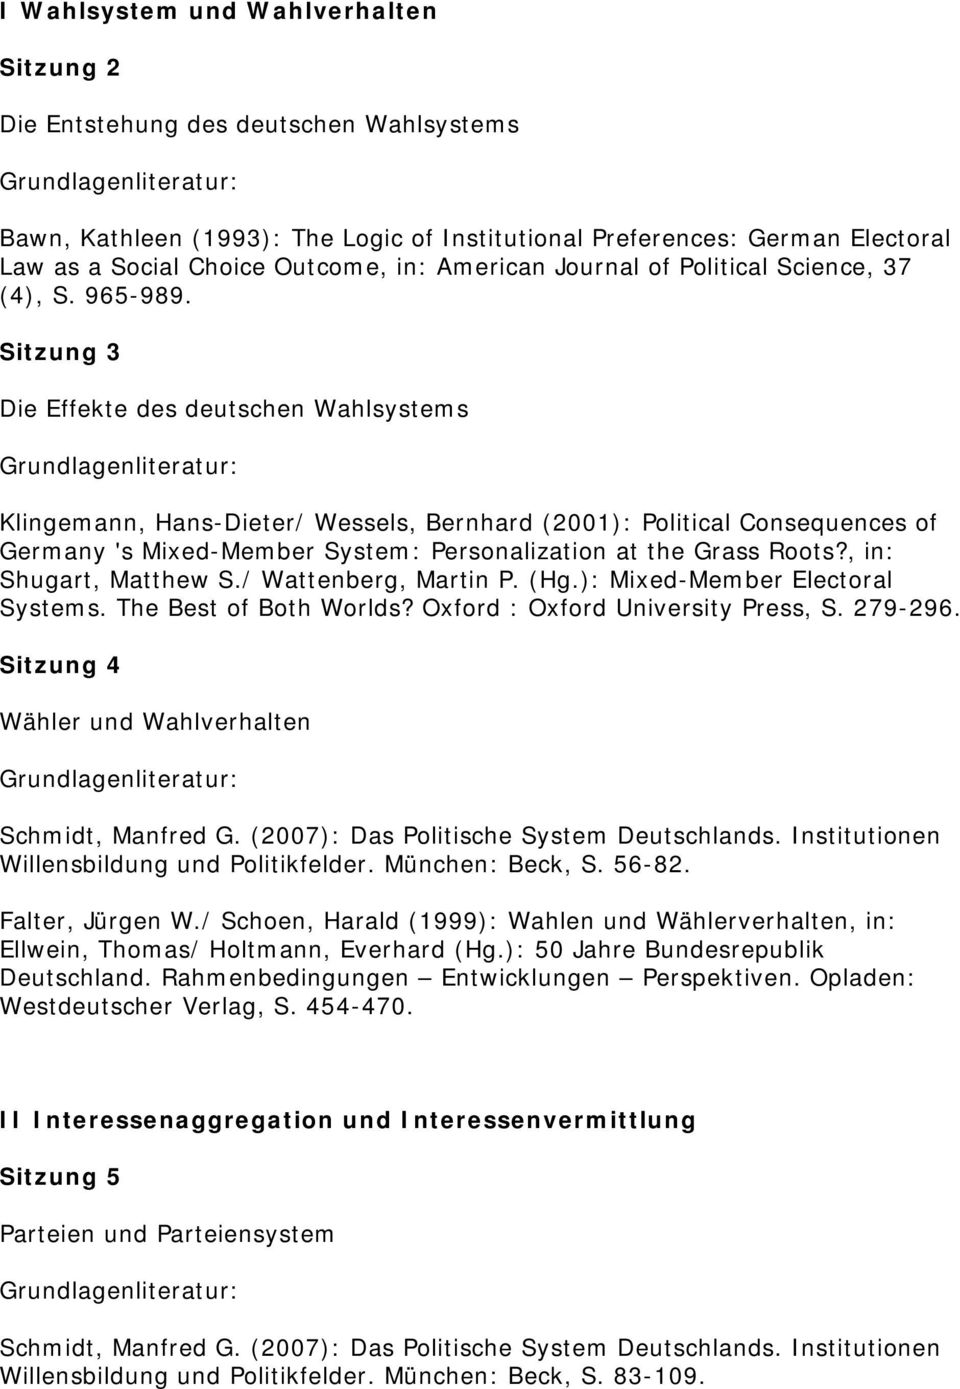 Sitzung 3 Die Effekte des deutschen Wahlsystems Klingemann, Hans-Dieter/ Wessels, Bernhard (2001): Political Consequences of Germany 's Mixed-Member System: Personalization at the Grass Roots?